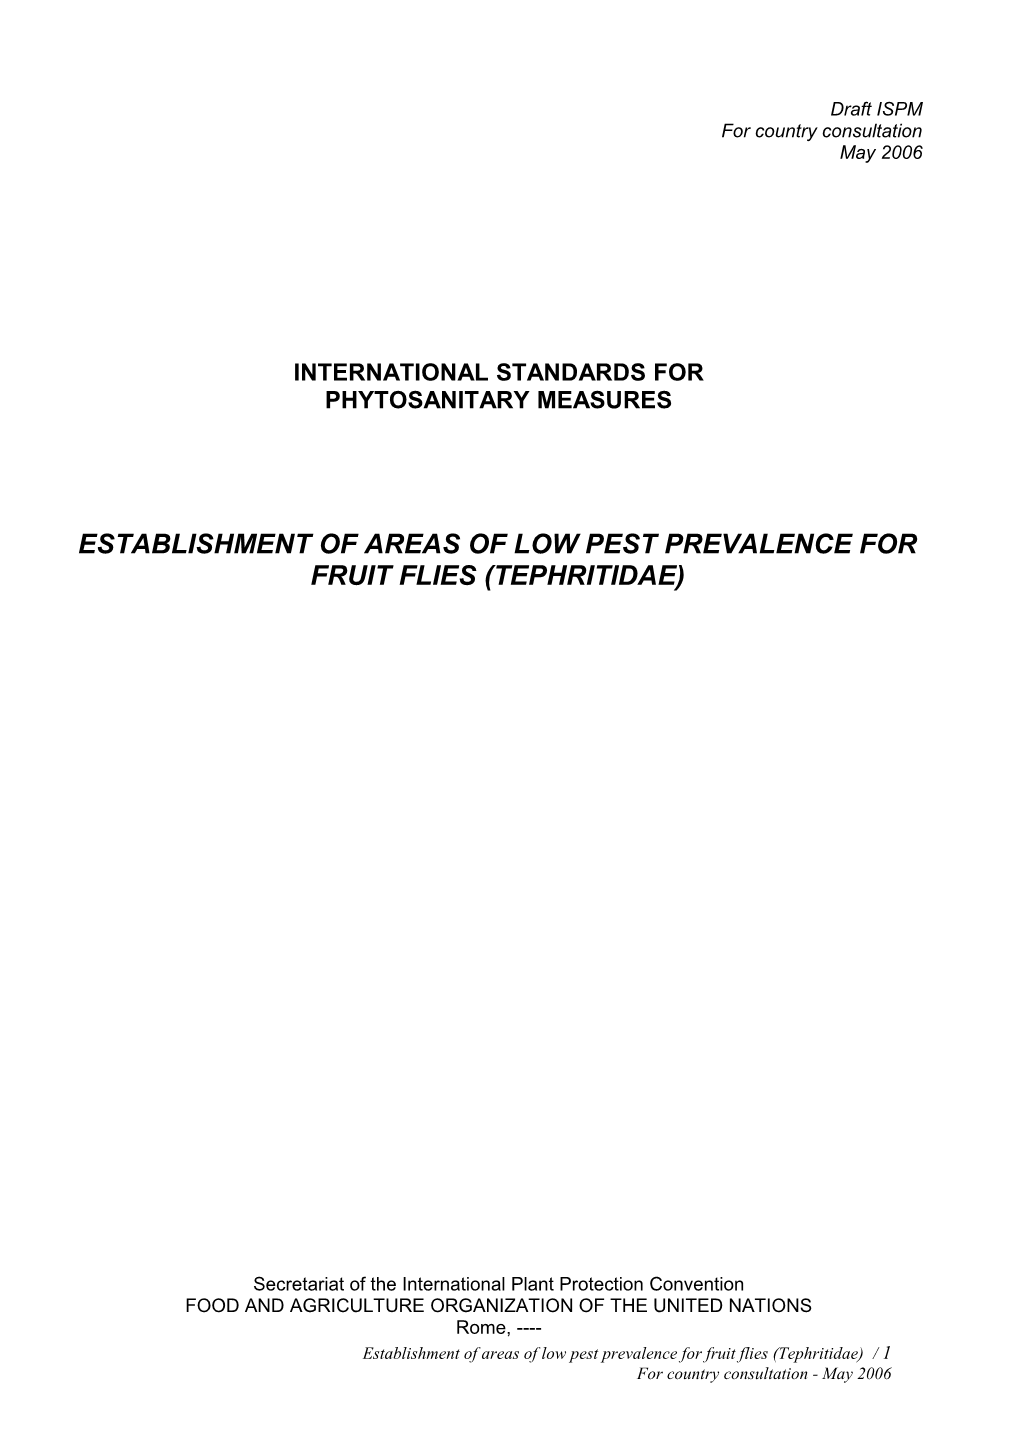 Establishment of Areas of Low Pest Prevalence for Fruit Flies (Tephritidae)